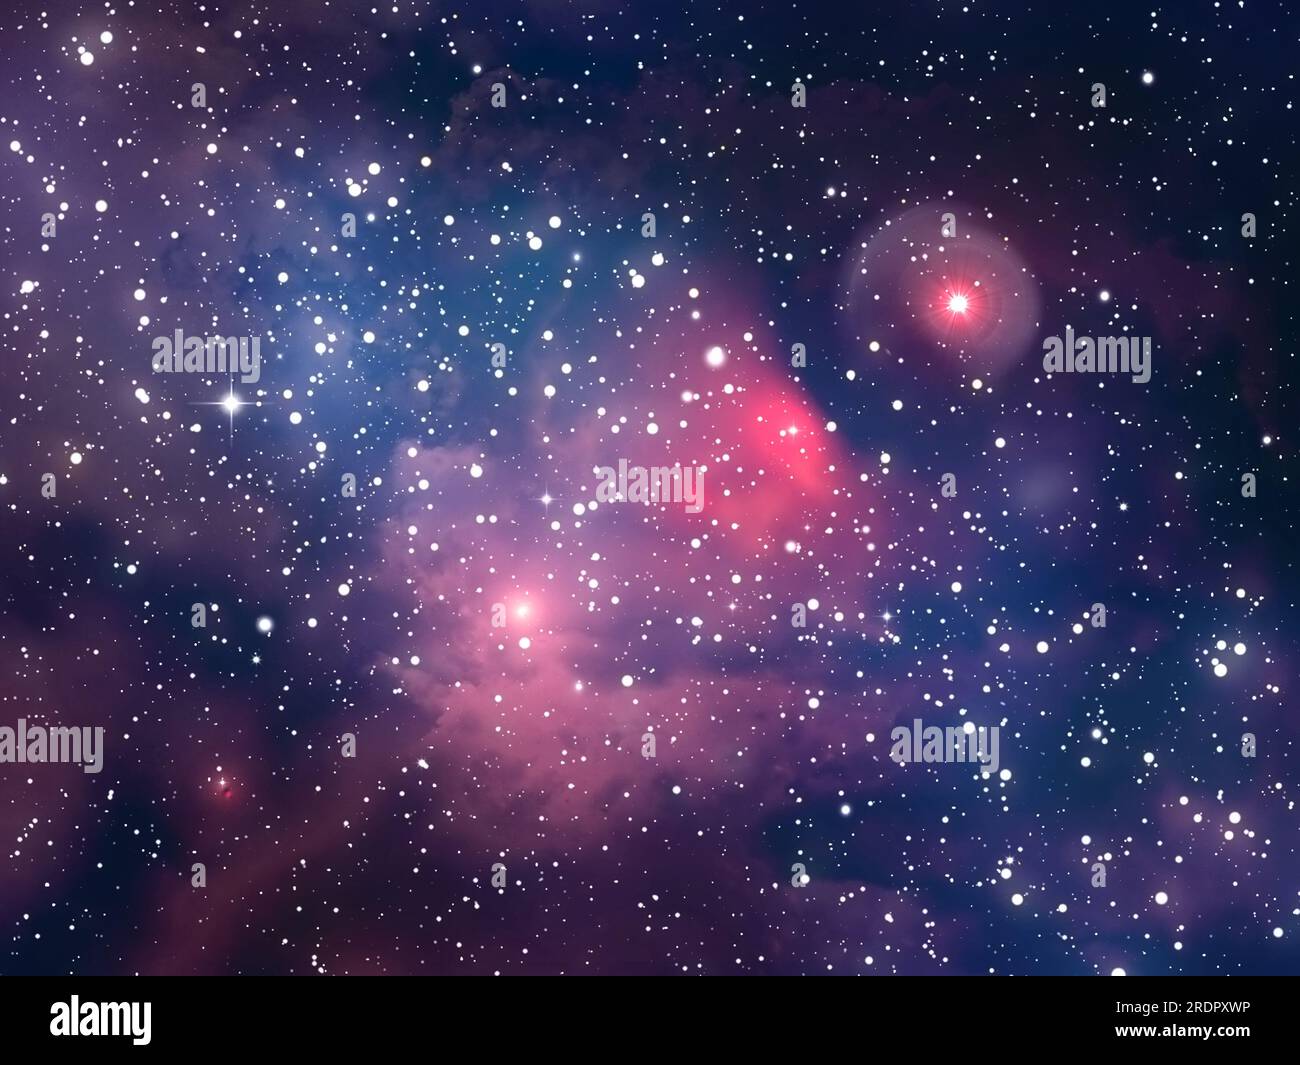 Space background with extrasolar nebula, 3D illustration Stock Photo